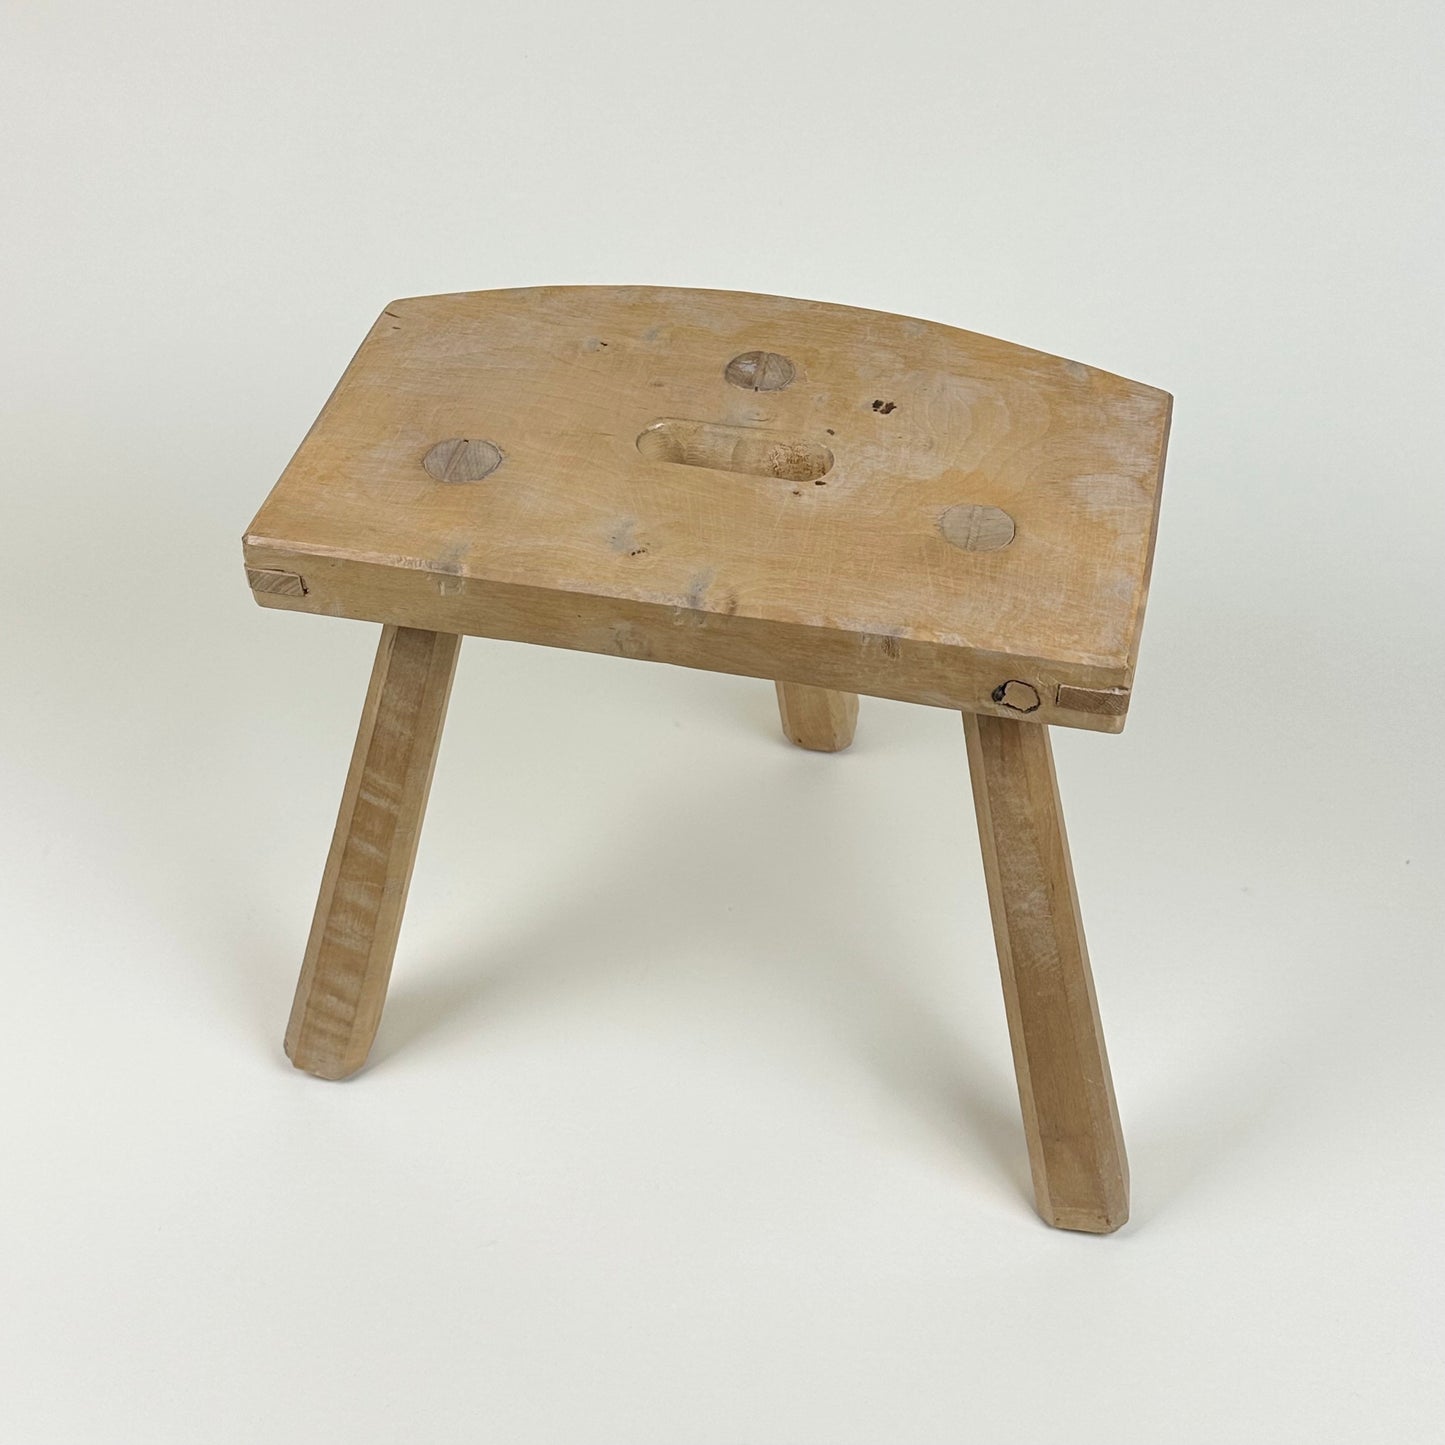 Low wooden stool, three legs, vintage